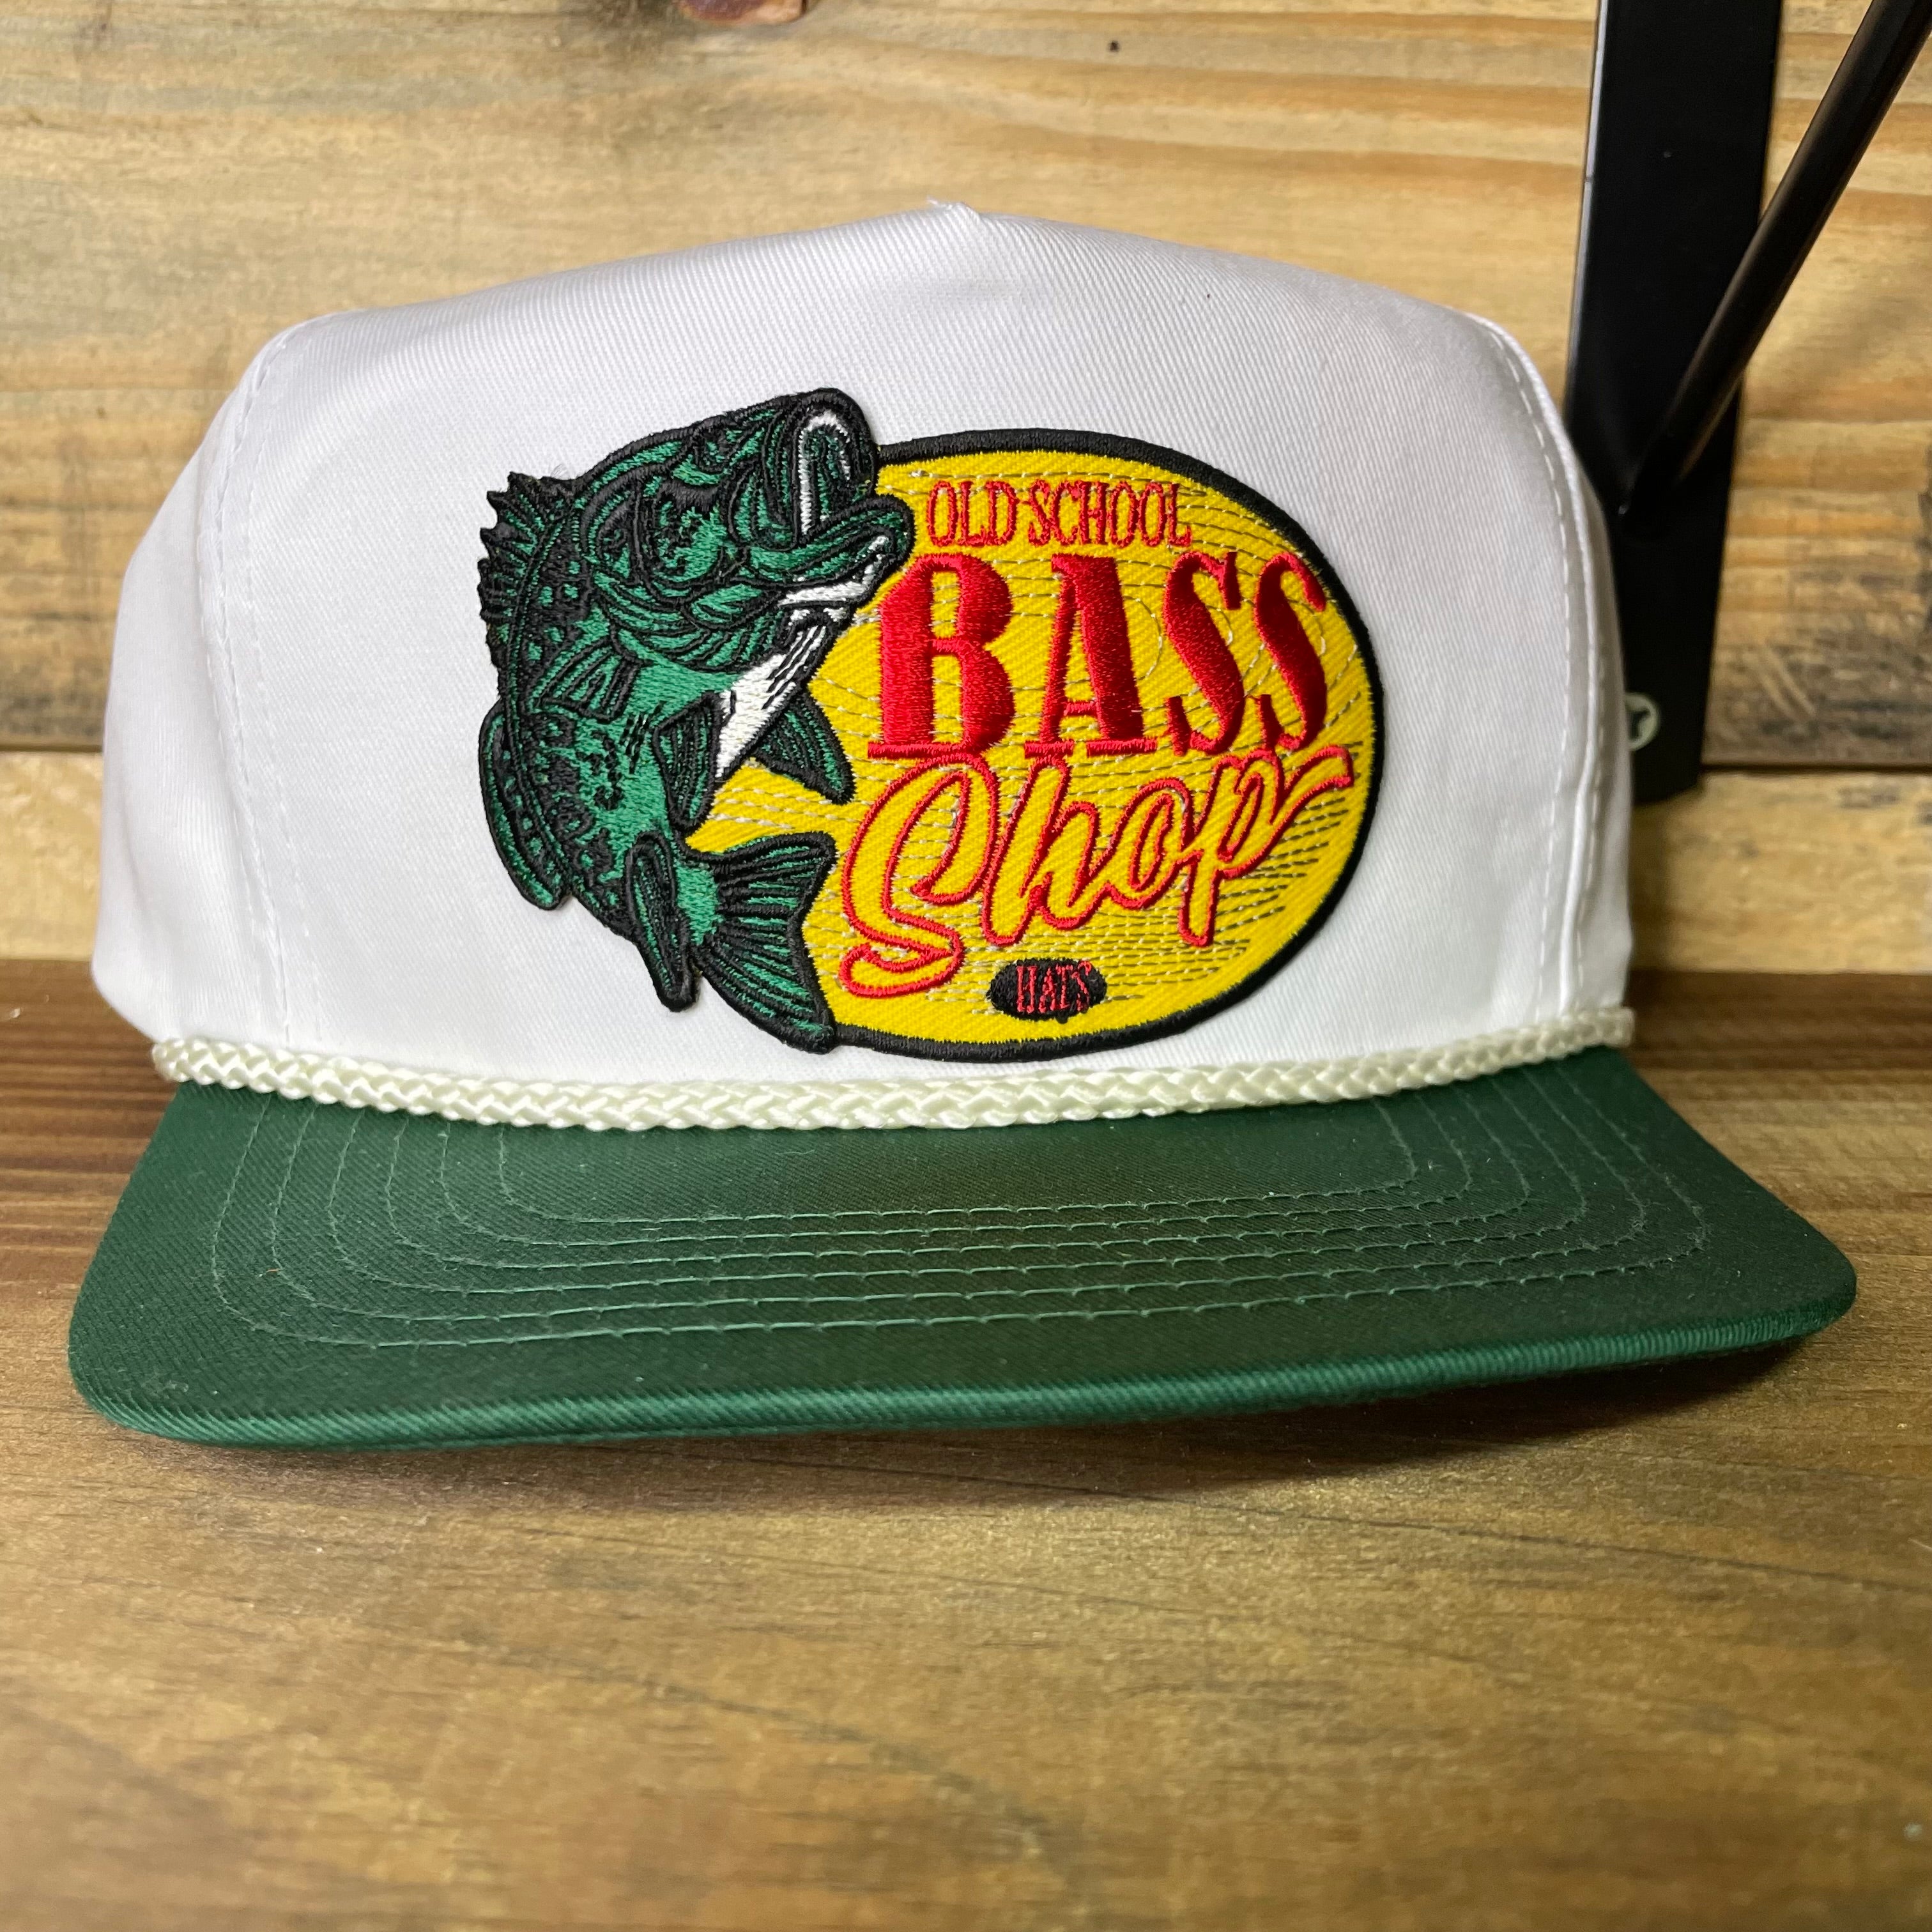 Vintage Bass Pro Shops Blue SnapBack Trucker Fishing Logo Baseball